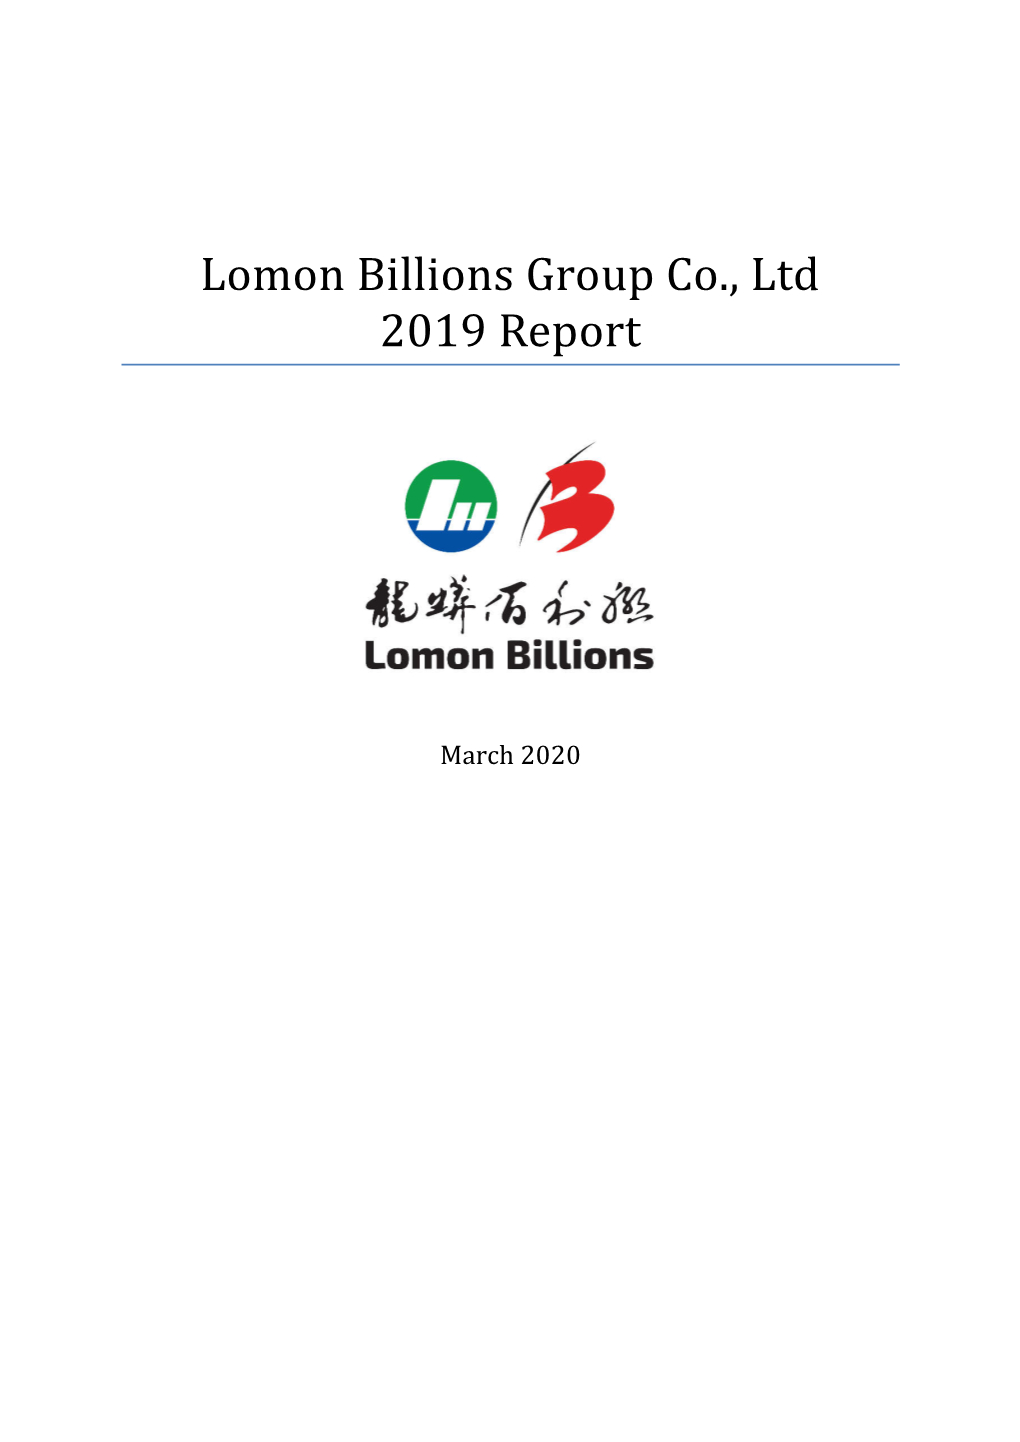 Lomon Billions Group Co., Ltd 2019 Report